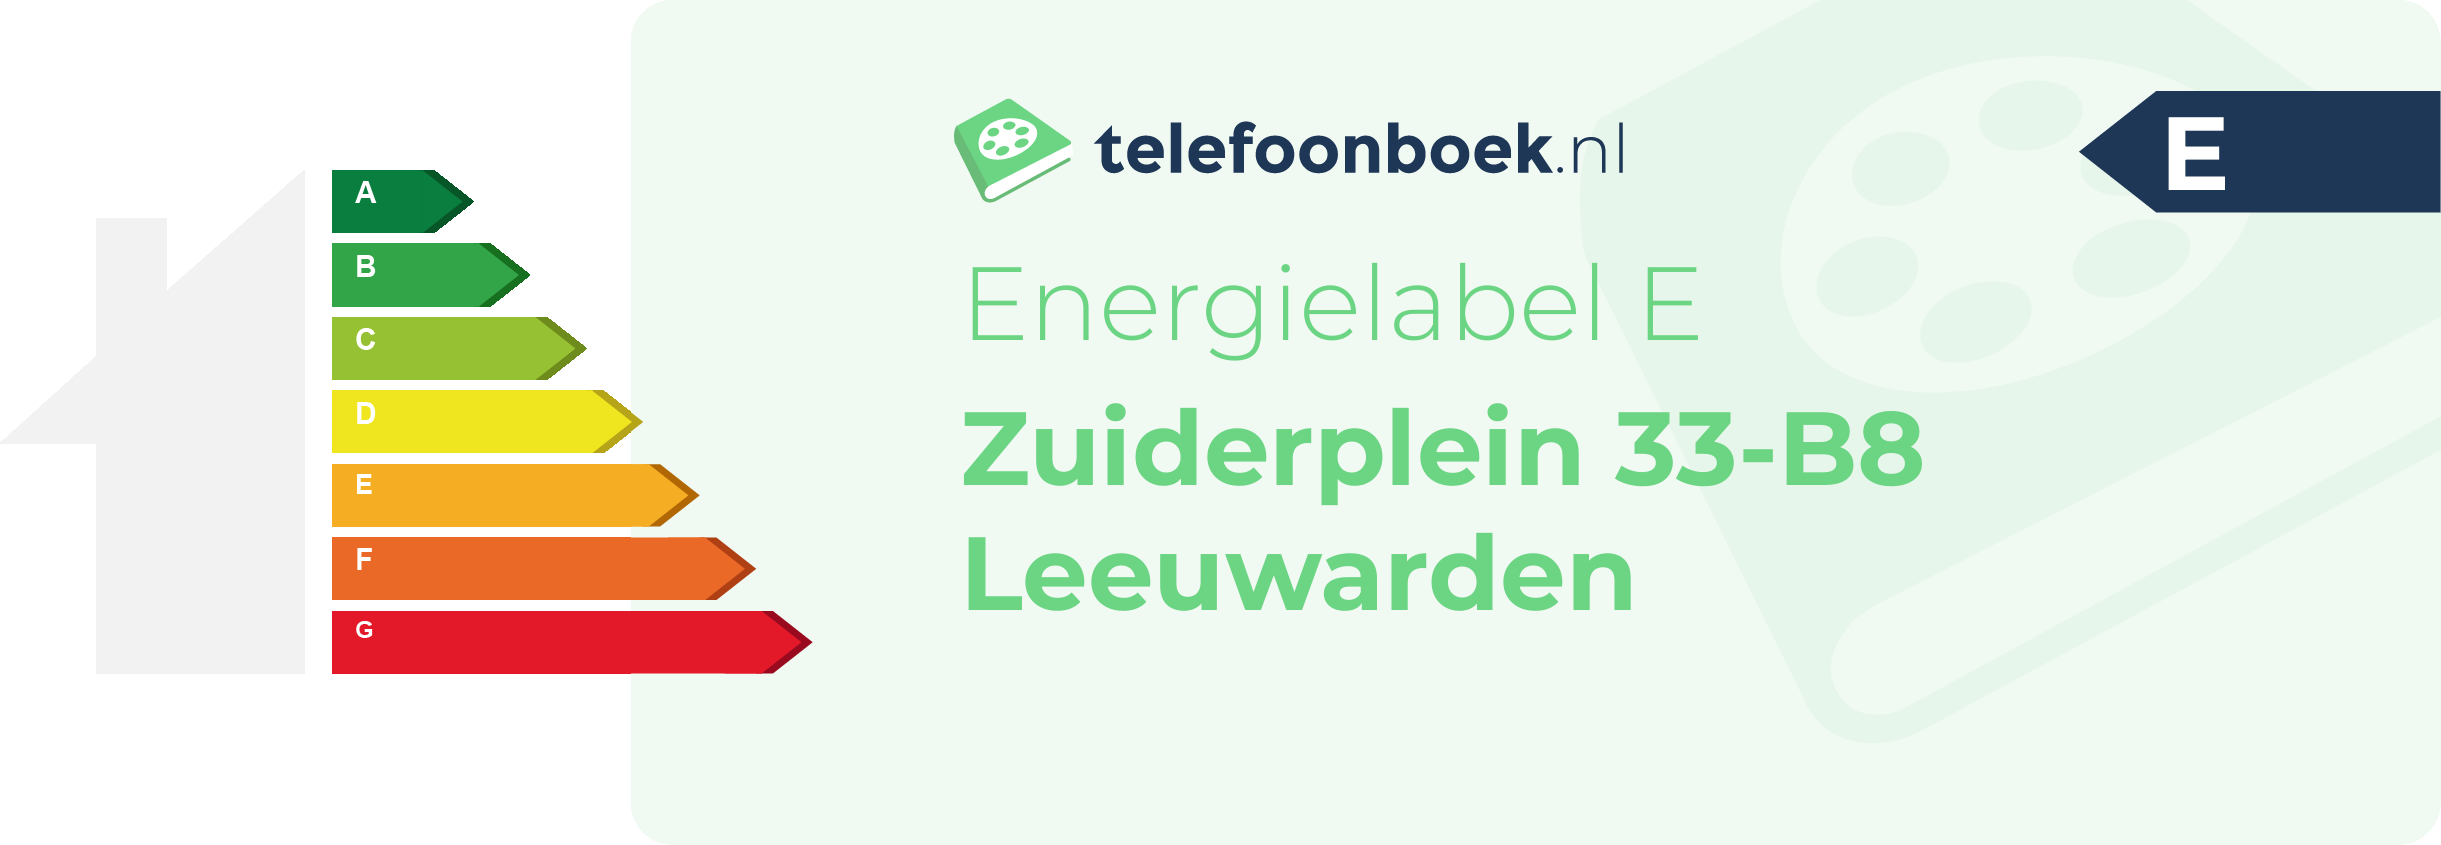 Energielabel Zuiderplein 33-B8 Leeuwarden